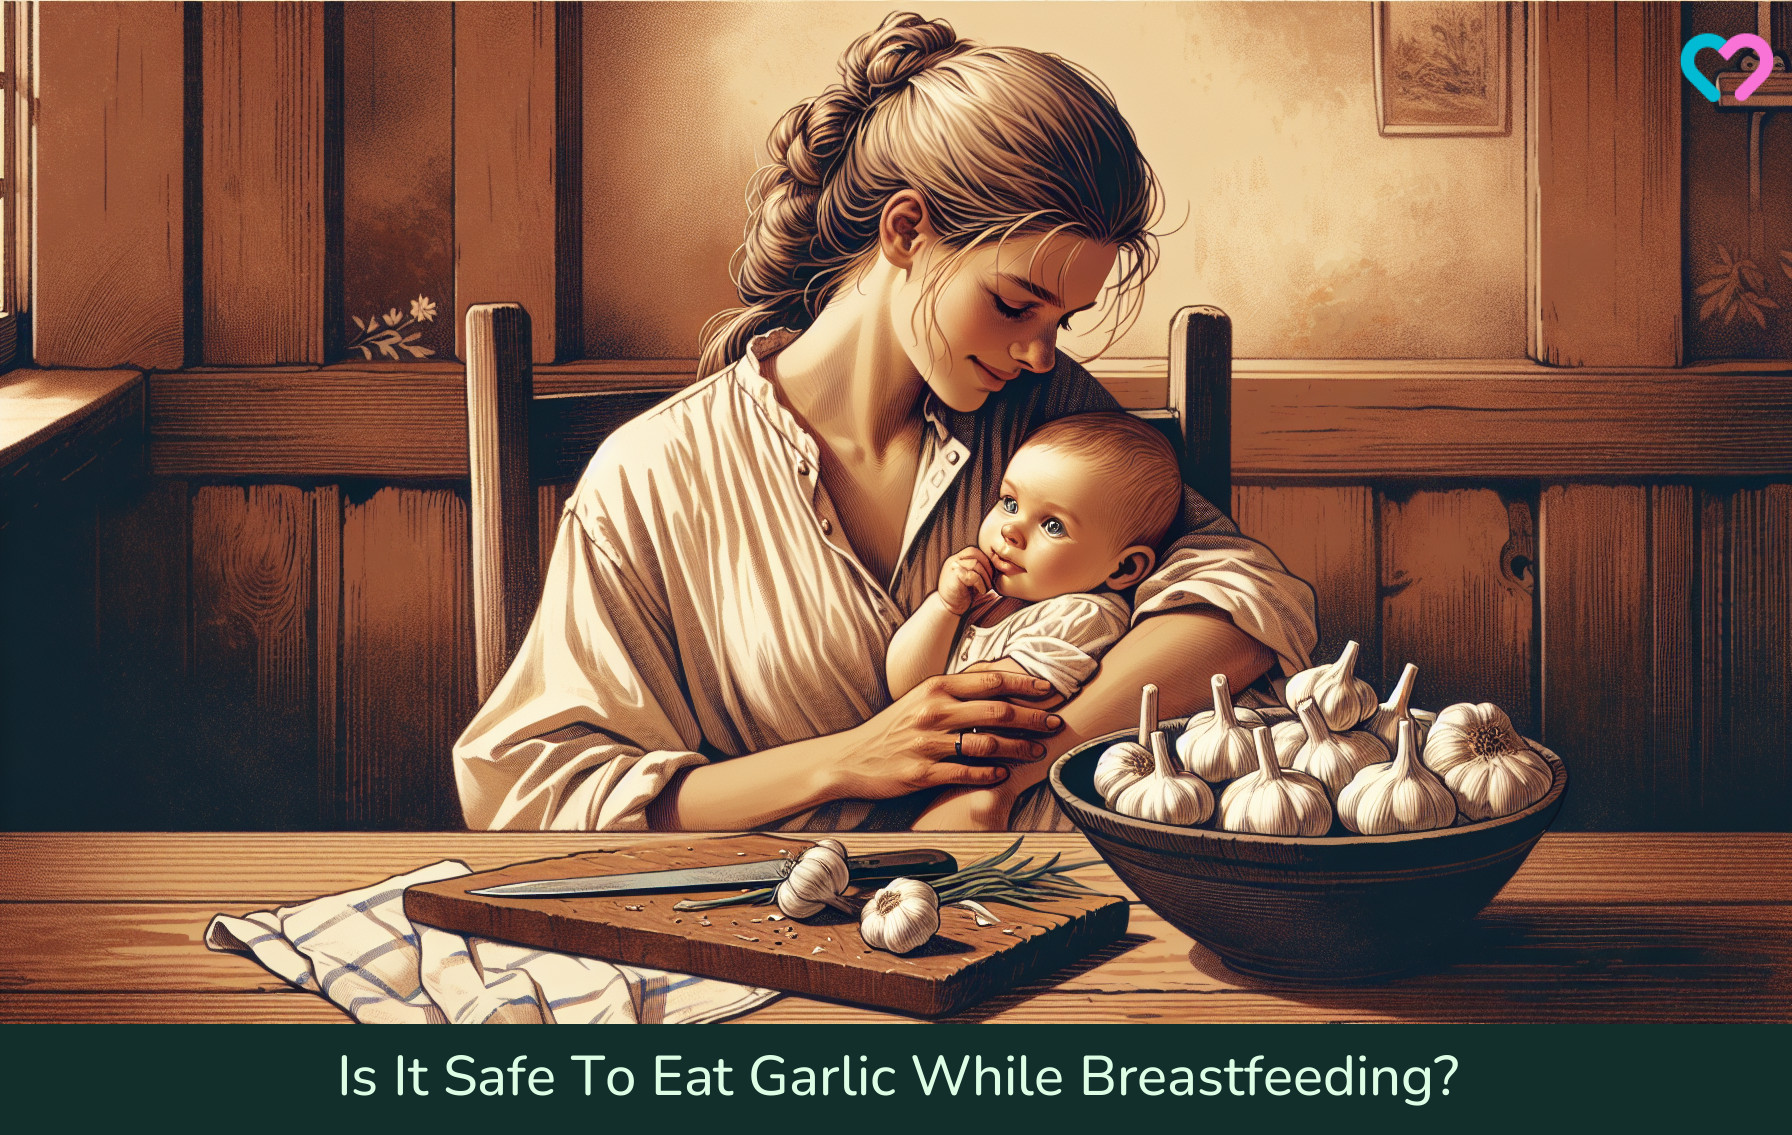 Garlic When Breastfeeding_illustration